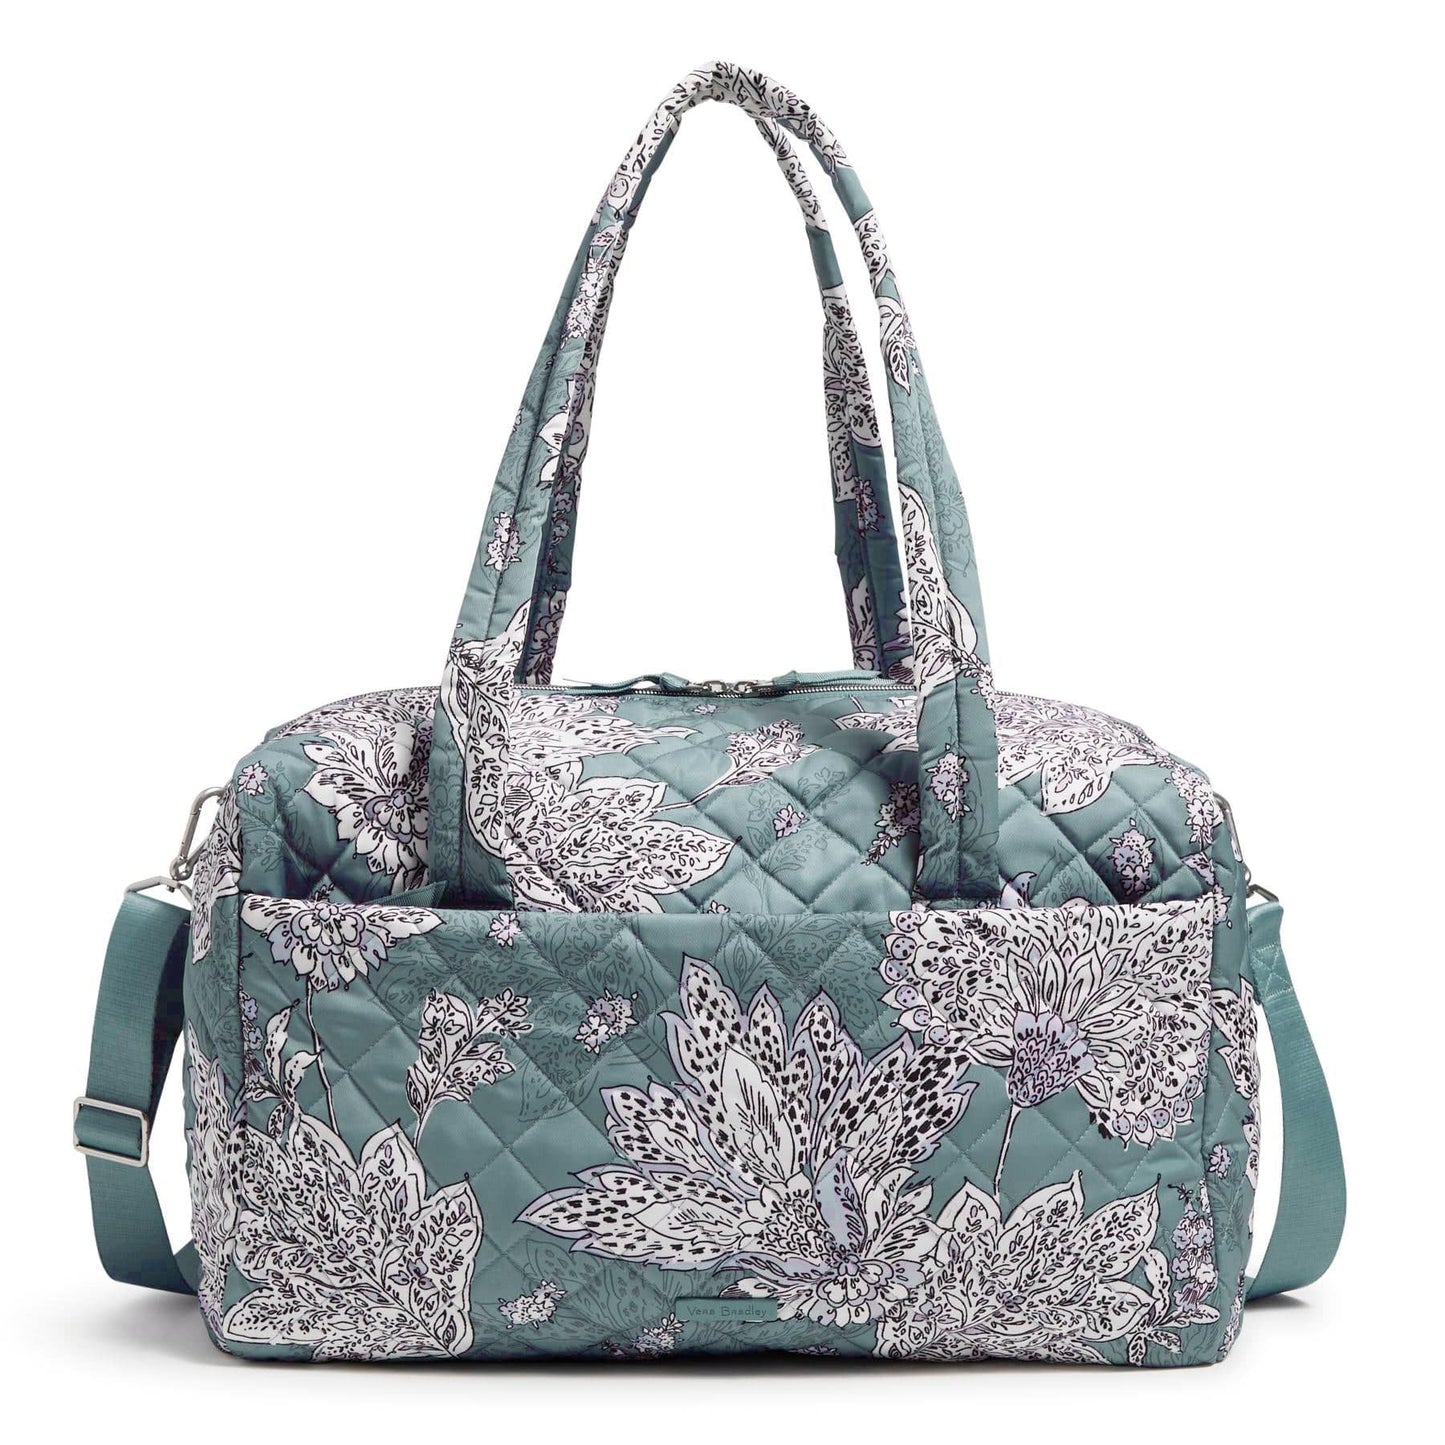 Medium Travel Duffel Bag-Tiger Lily Blue Oar-Image 1-Vera Bradley